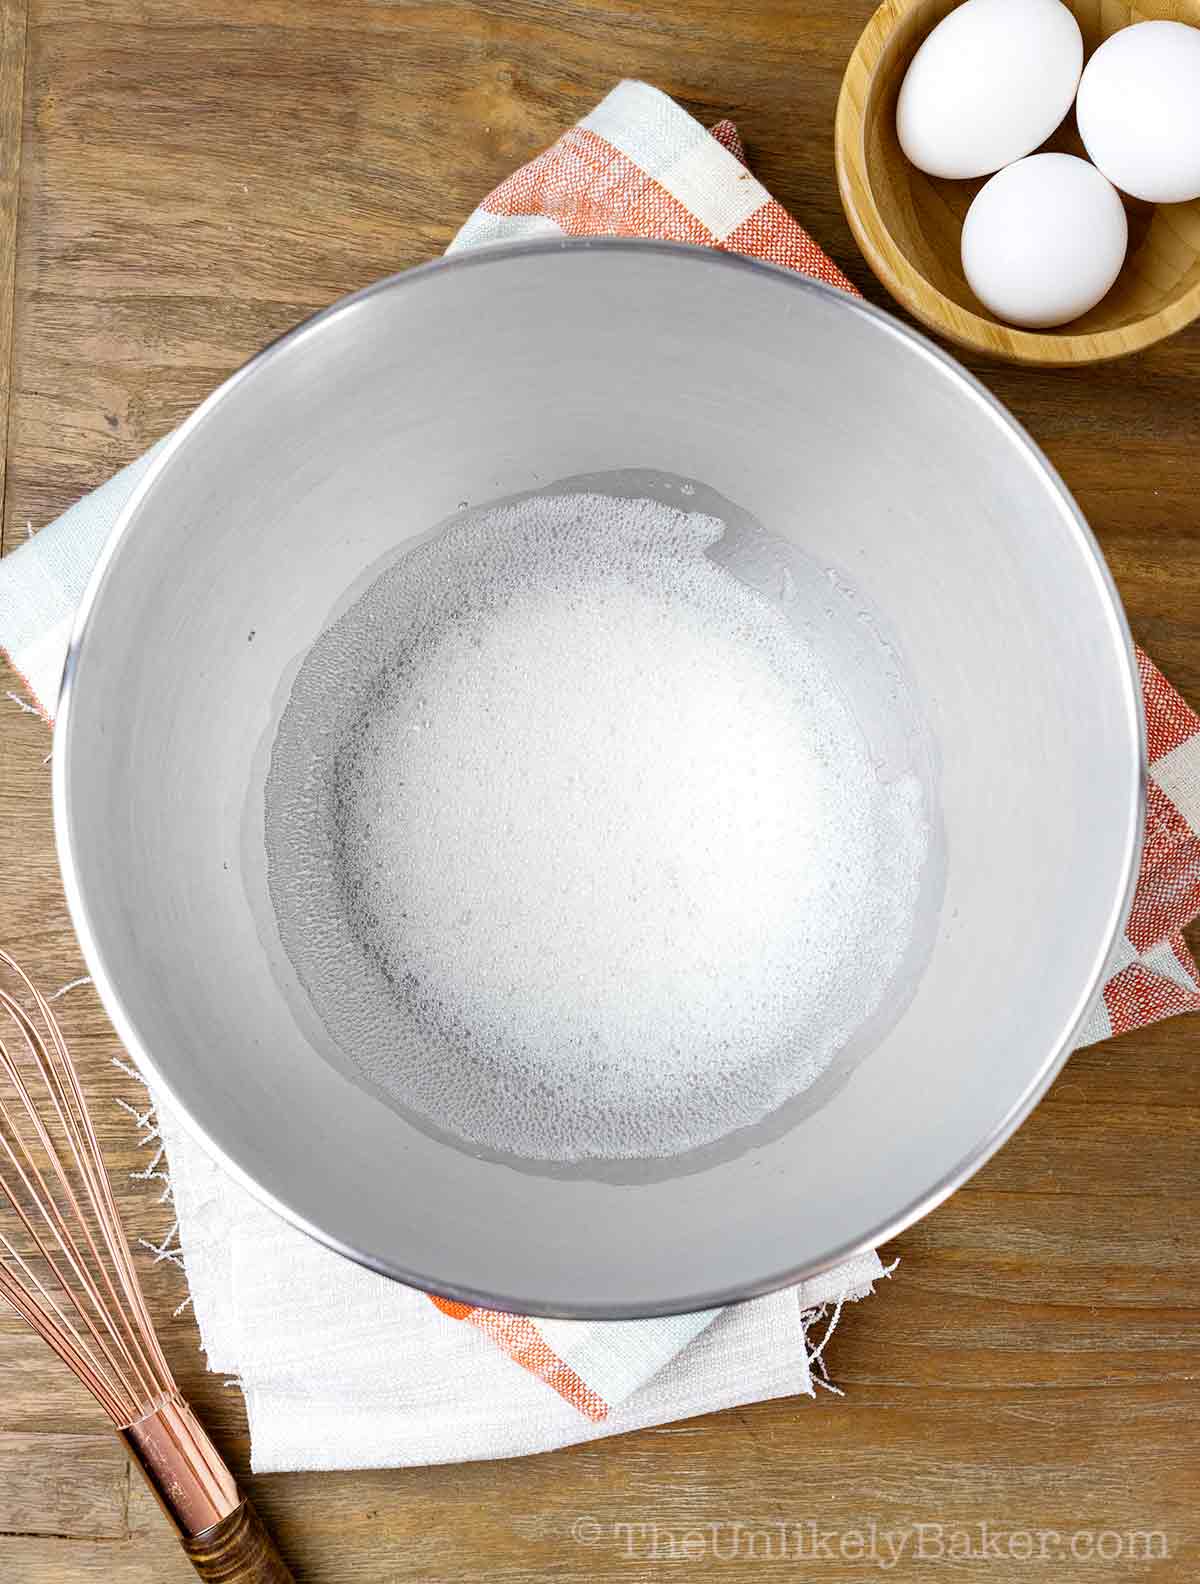 Foamy egg whites in a bowl.